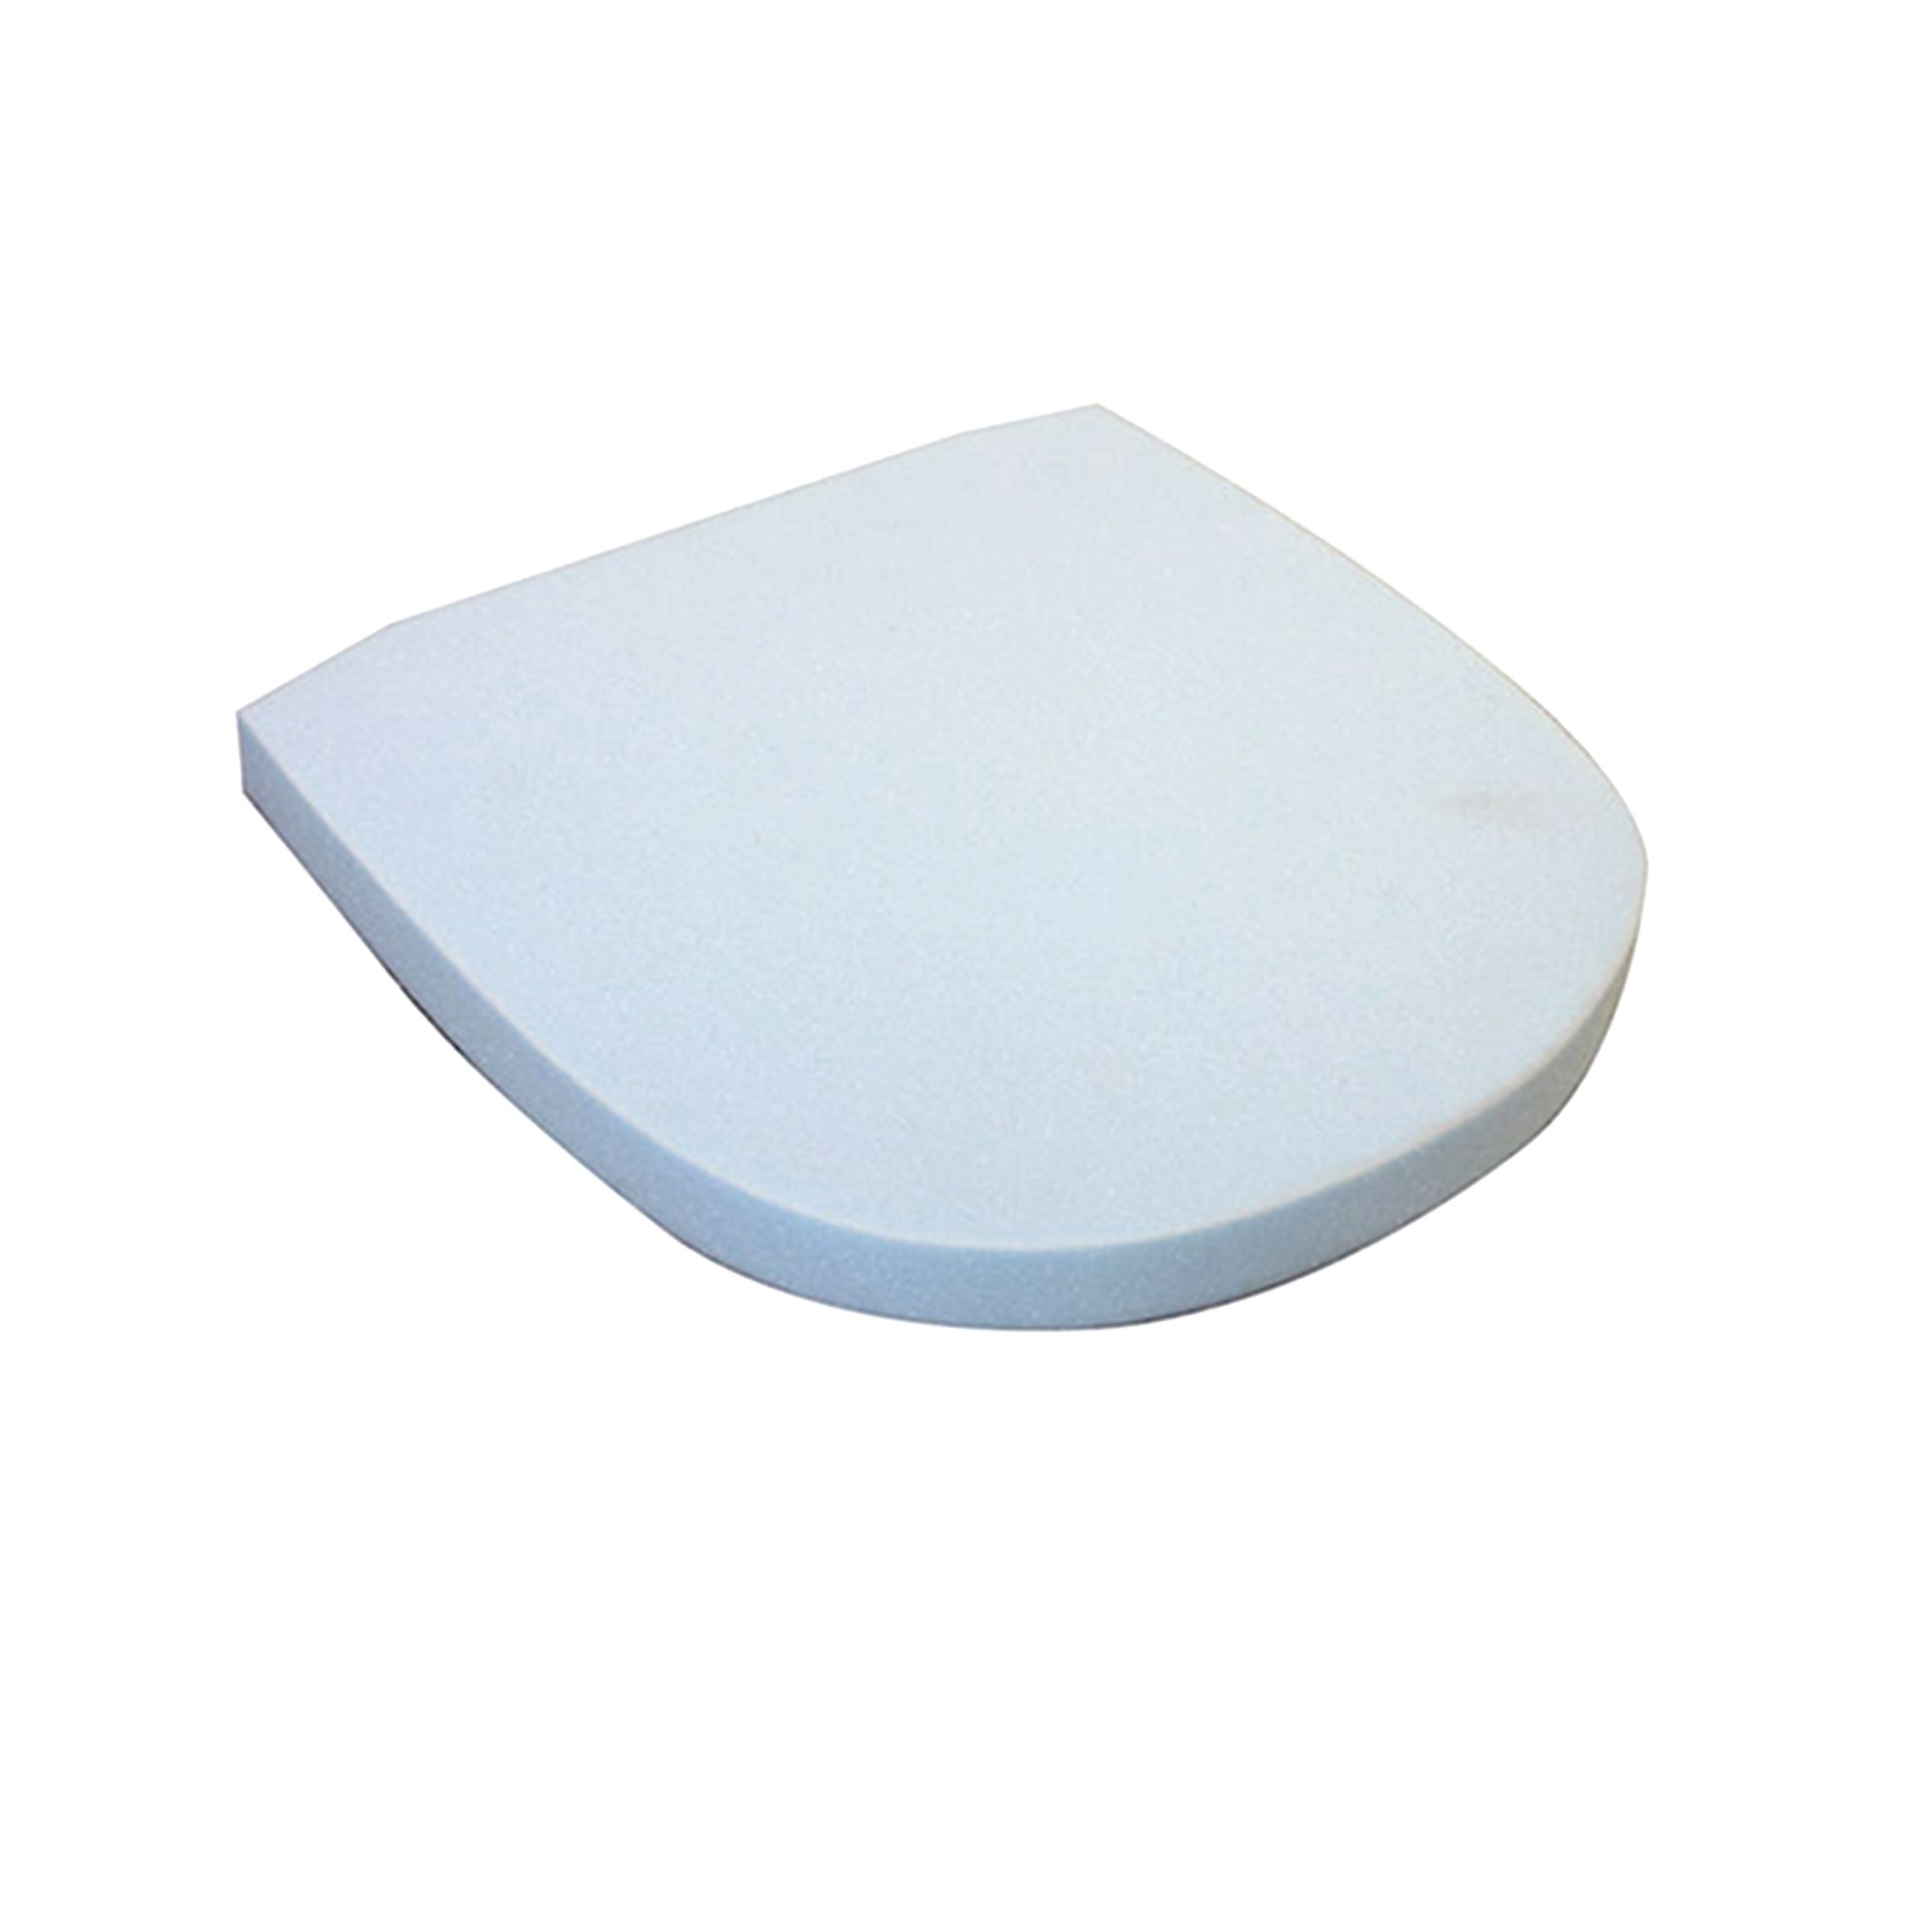 Upholstery Foam Seat Pad